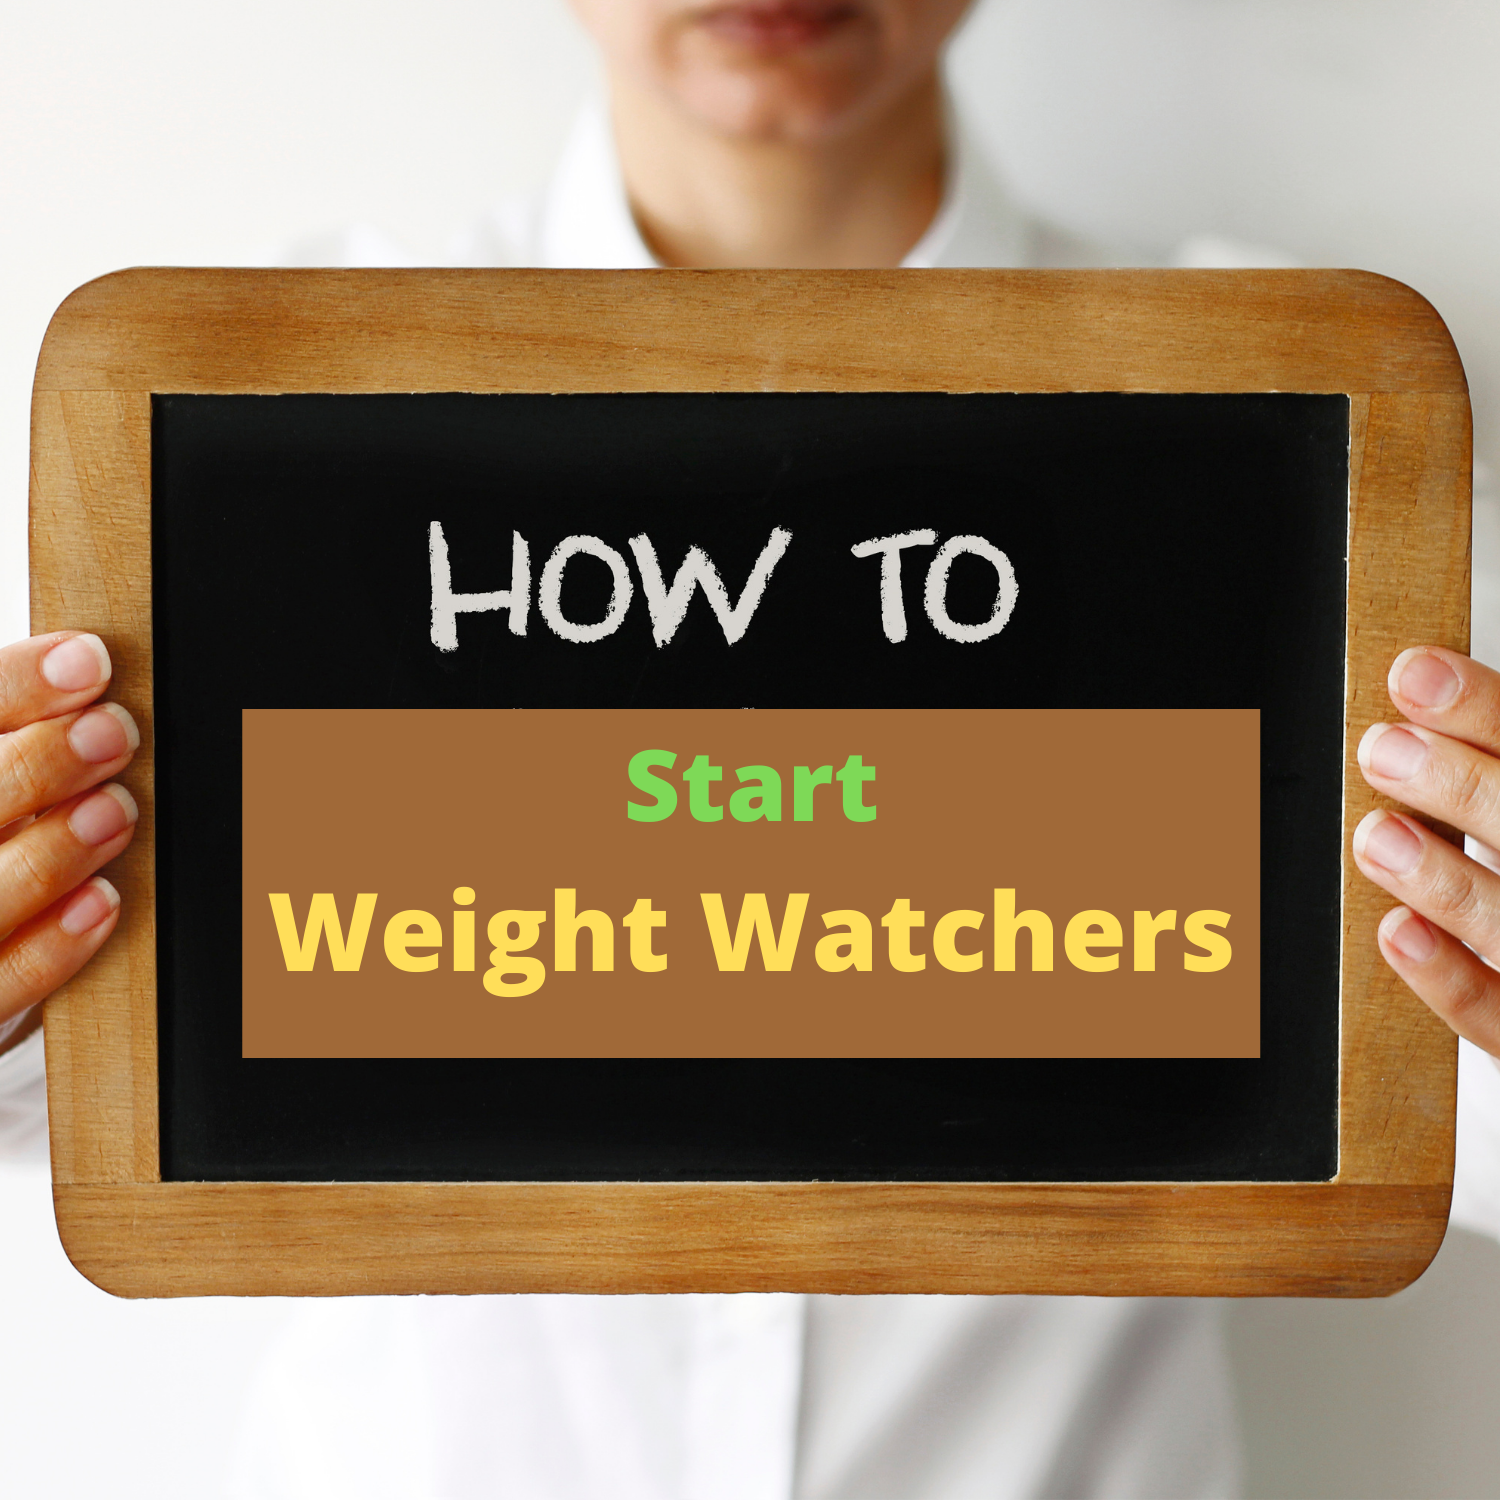 How to Start Weight Watchers?